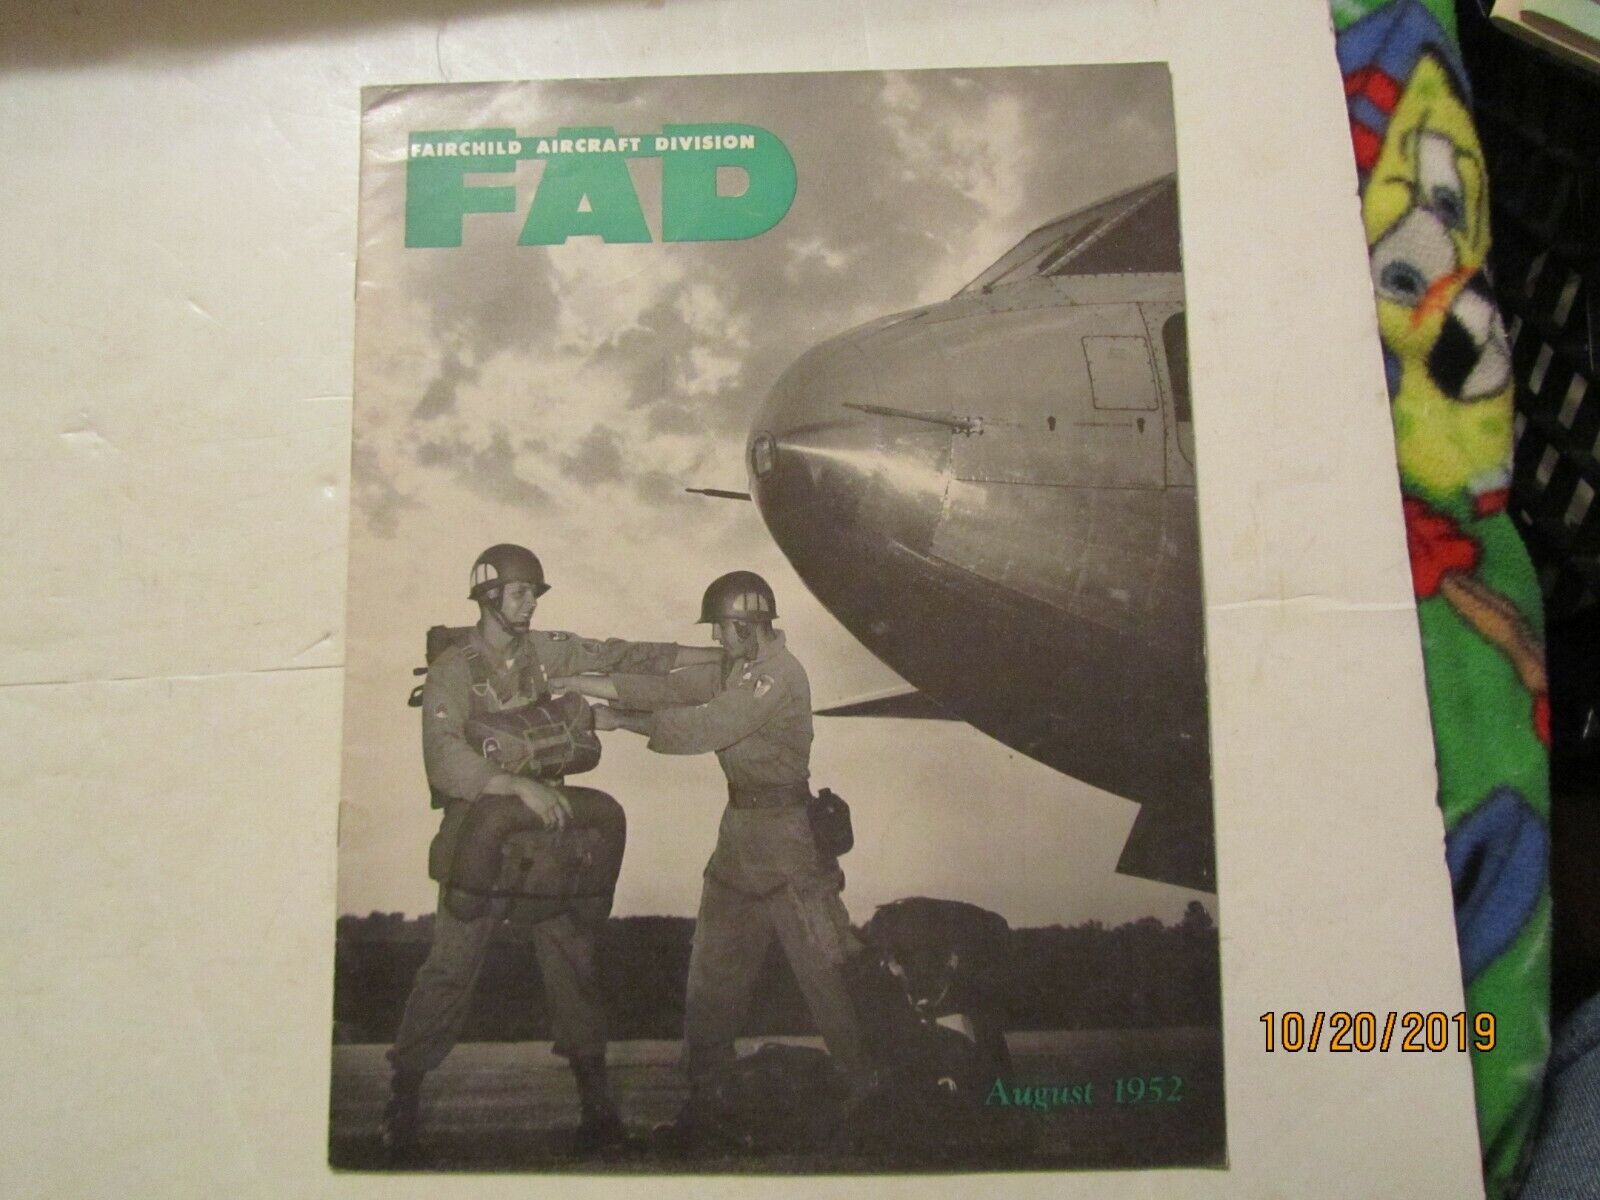 Vintage Fairchild Aircraft Division August 1952 Employee Magazine